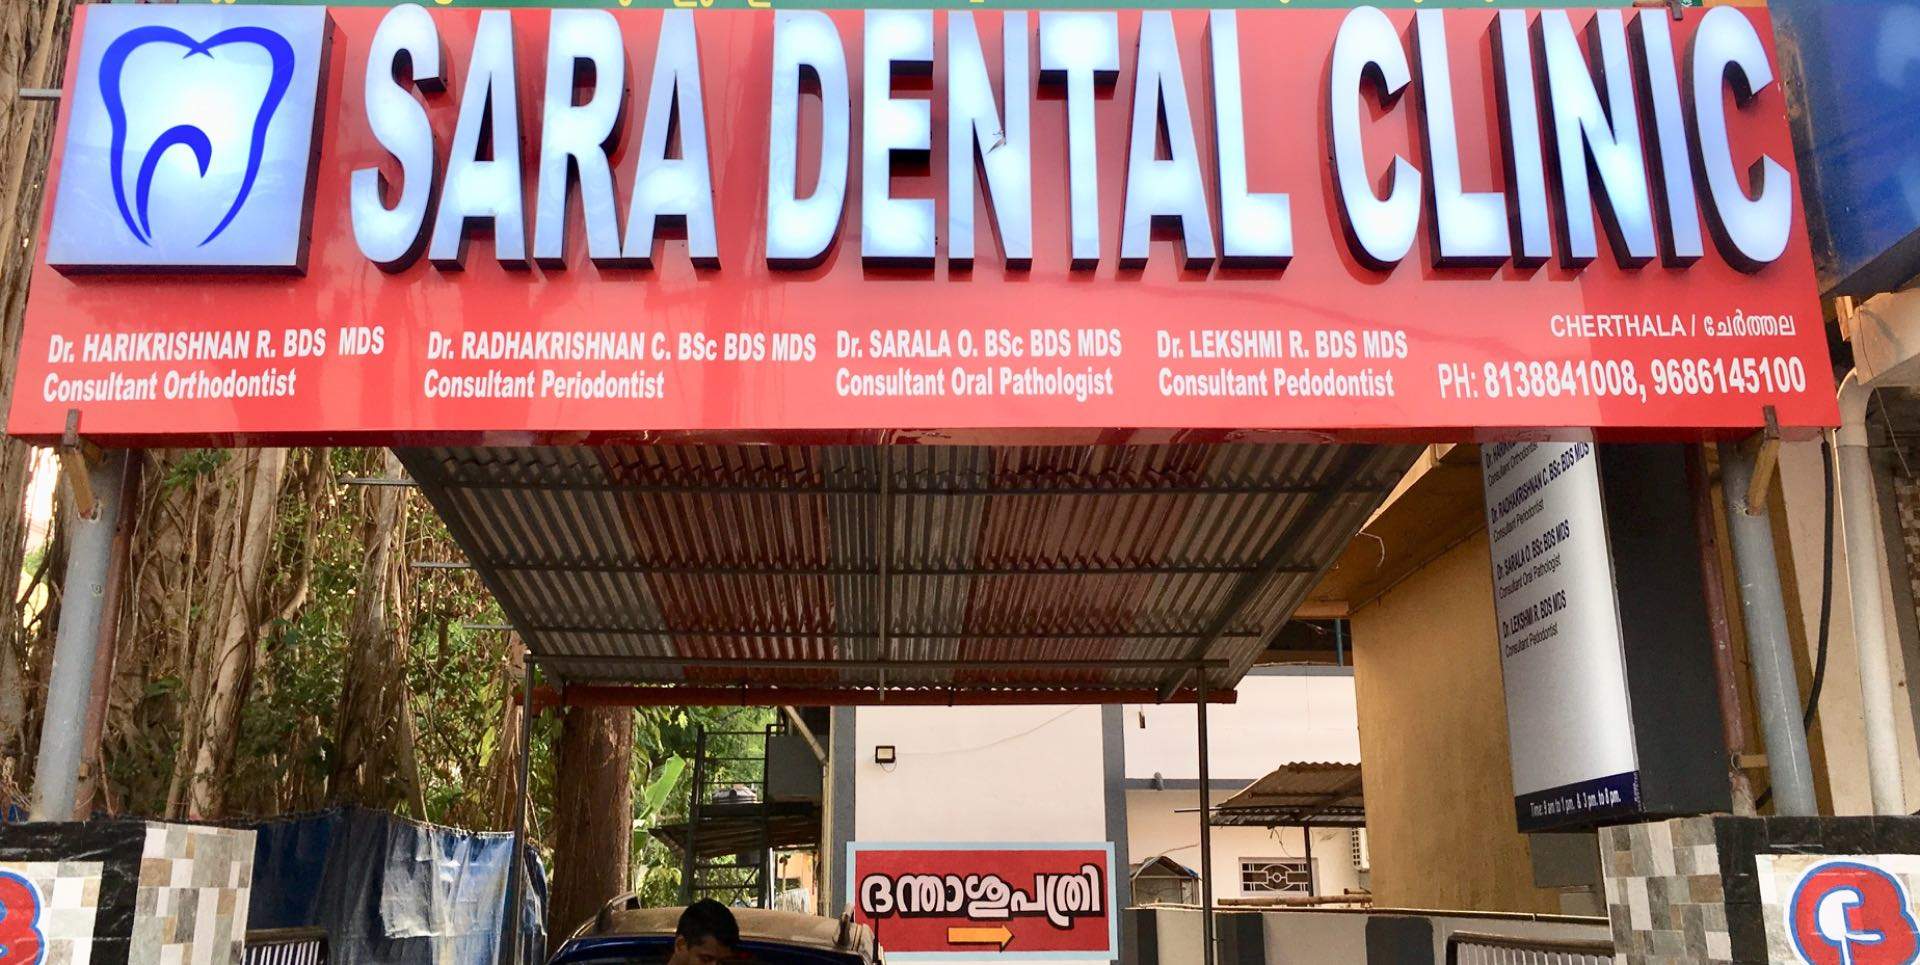 Sara Dental Clinic, DENTAL CLINIC,  service in Cherthala, Alappuzha